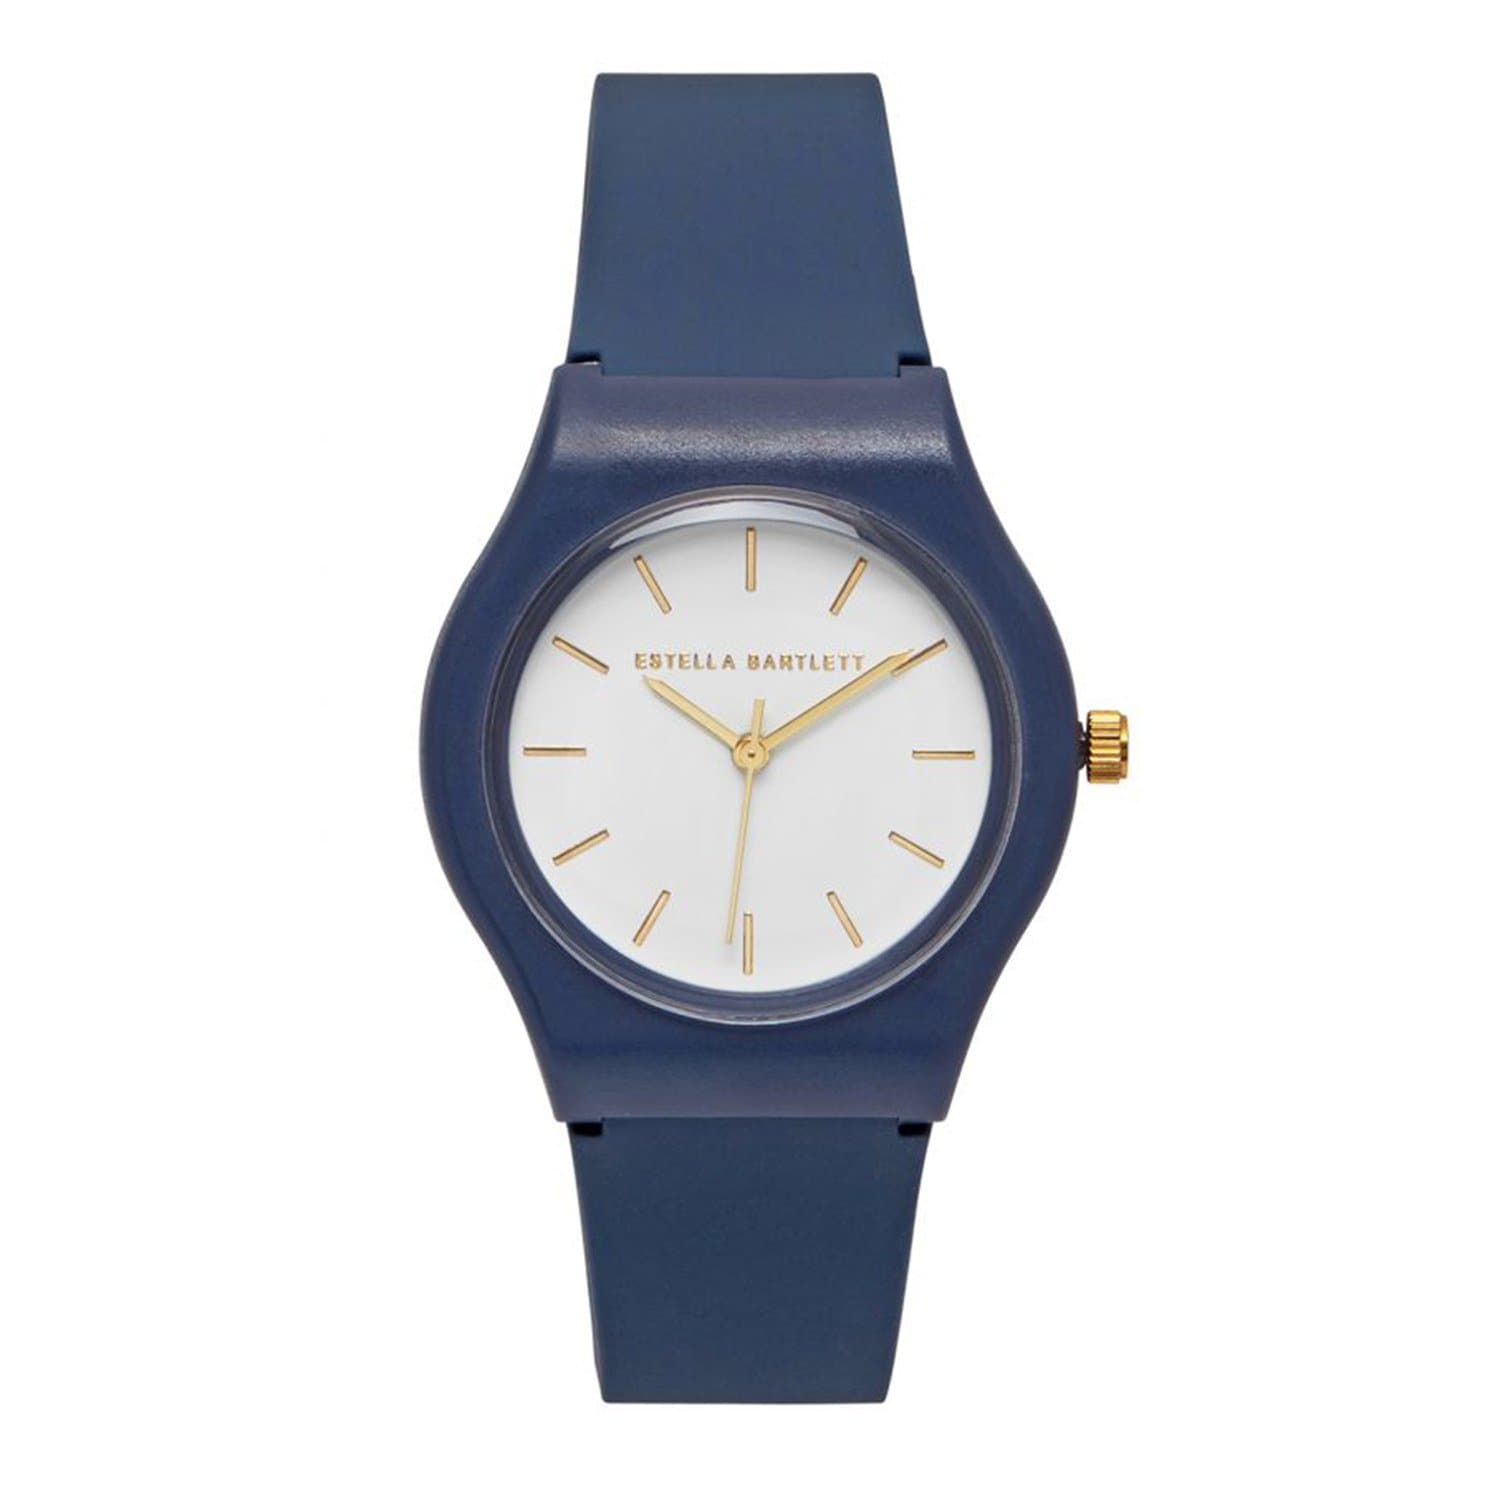 Estella Bartlett Silicone Strap Watch - Navy and Gold - EBW3372